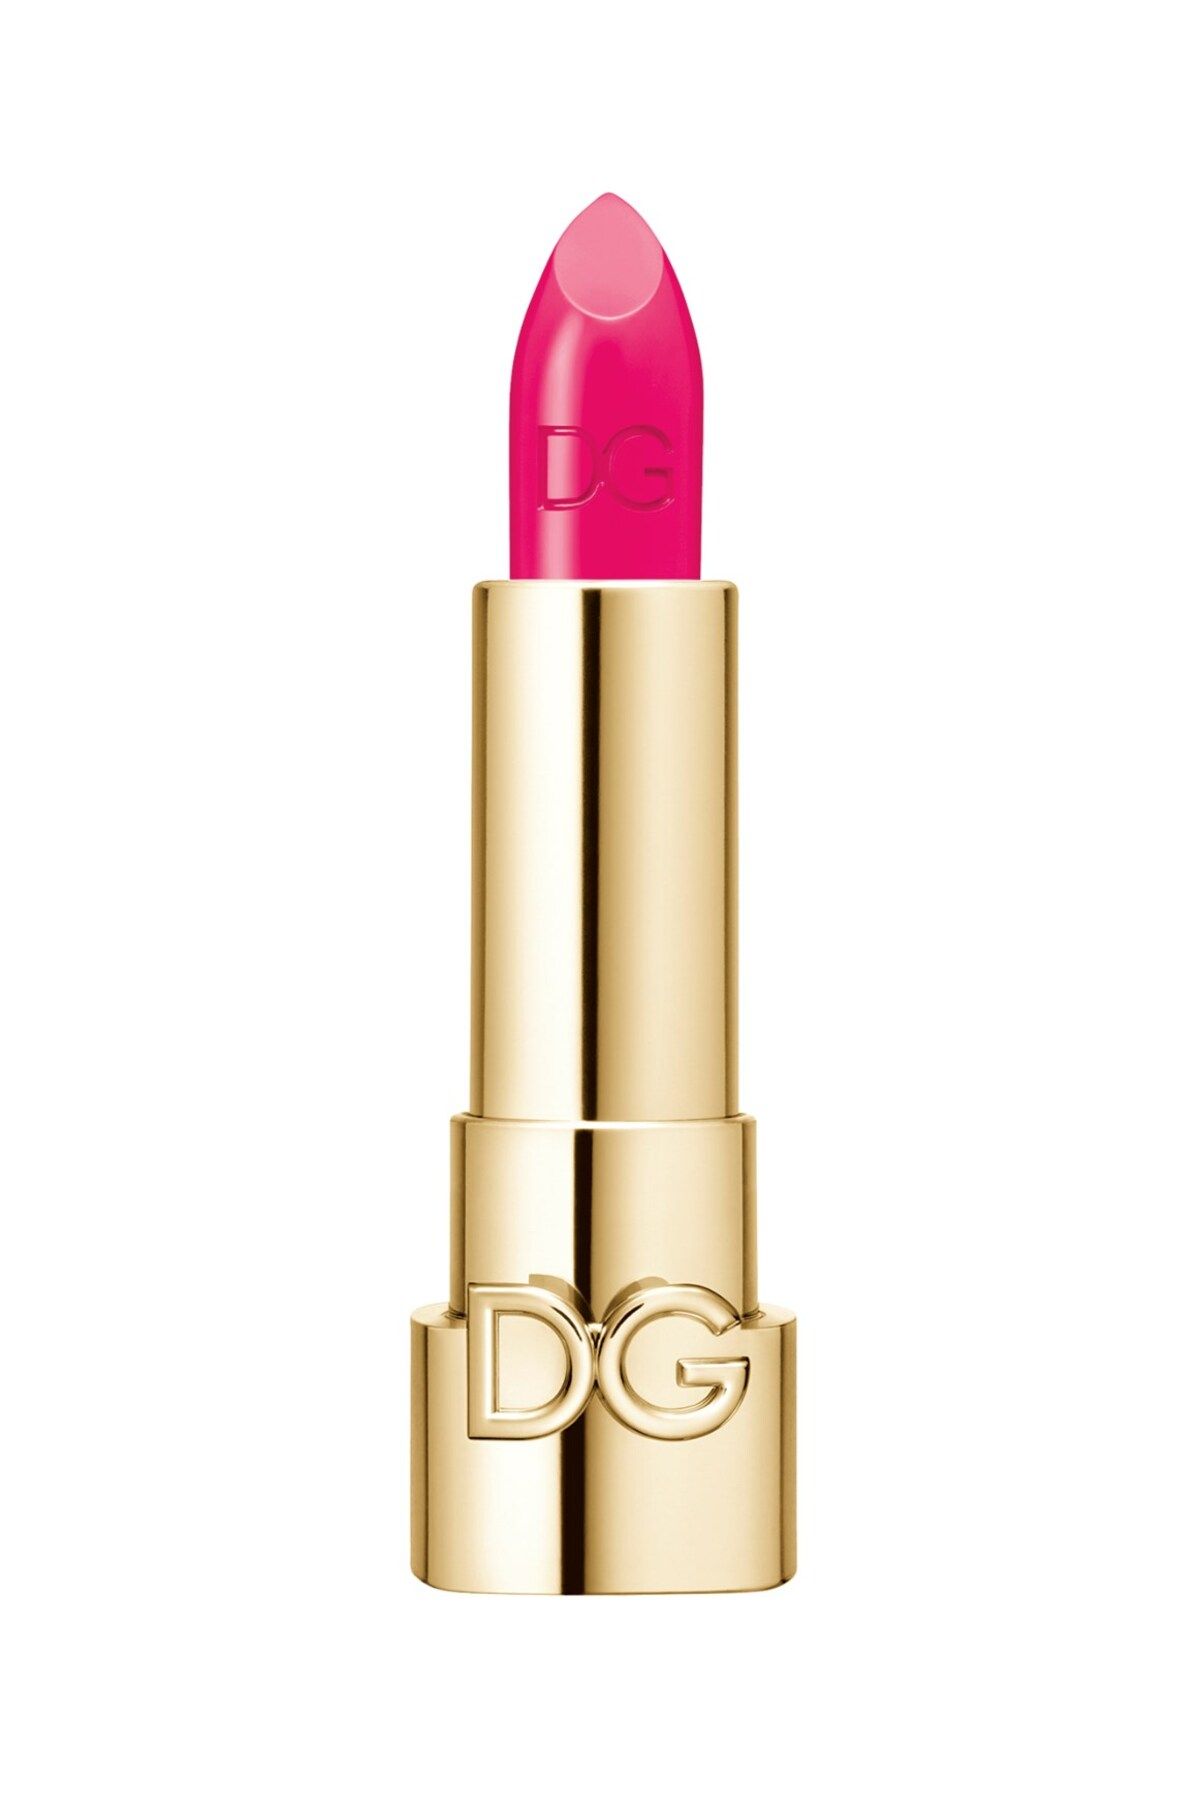 Dolce&Gabbana Dolce&Gabbana The Only One Lumınous Colour Lıpstıck Shocking Fla